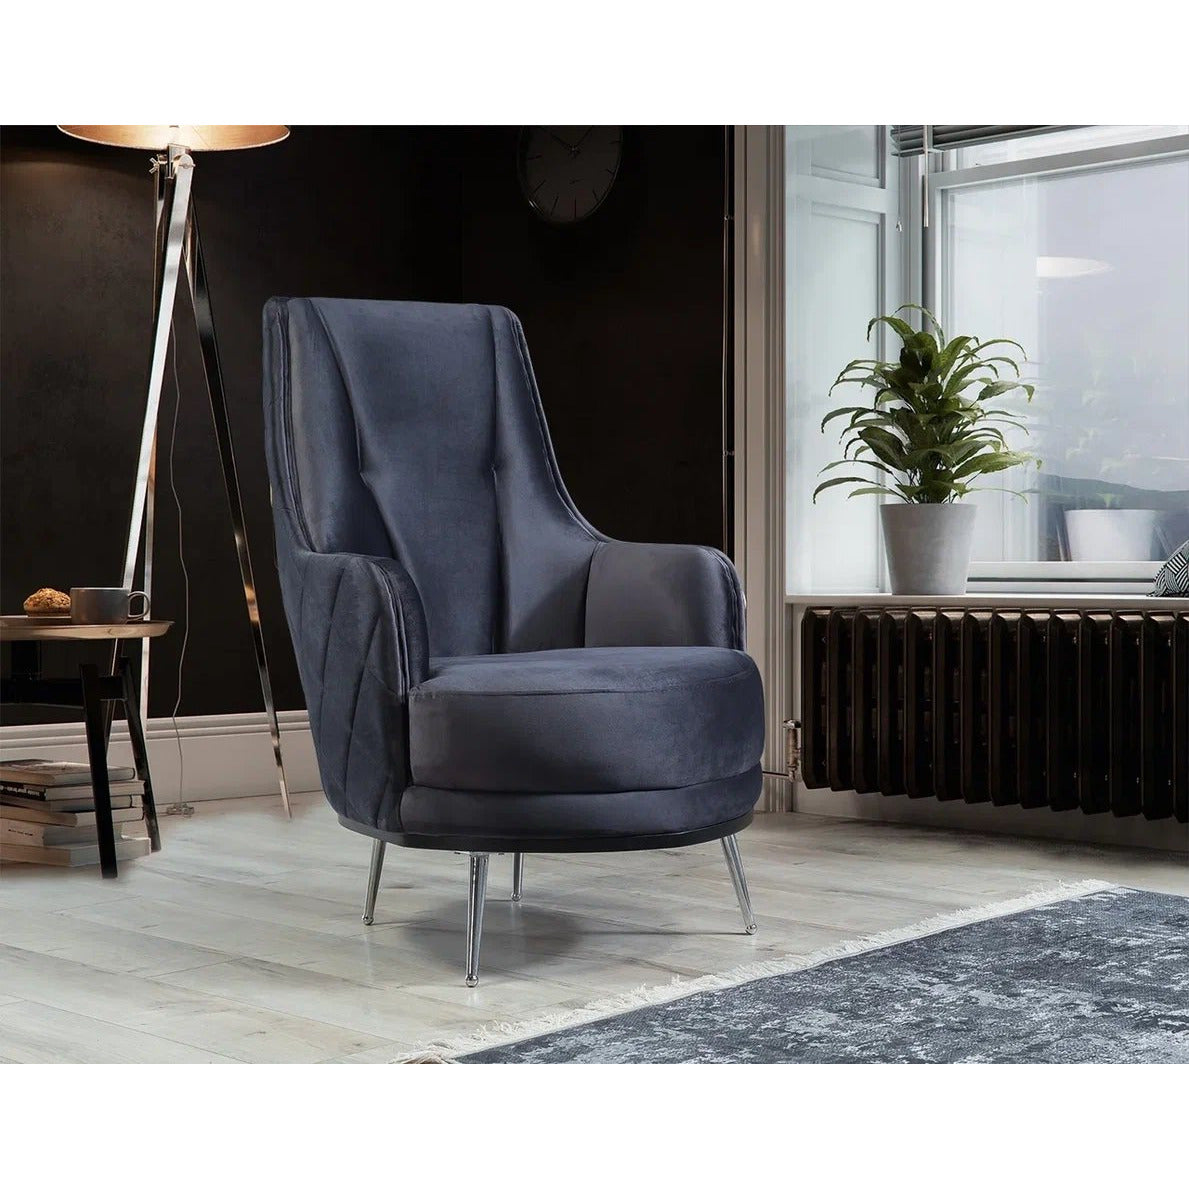 Sofia Soffgrupp - LINE Furniture Group